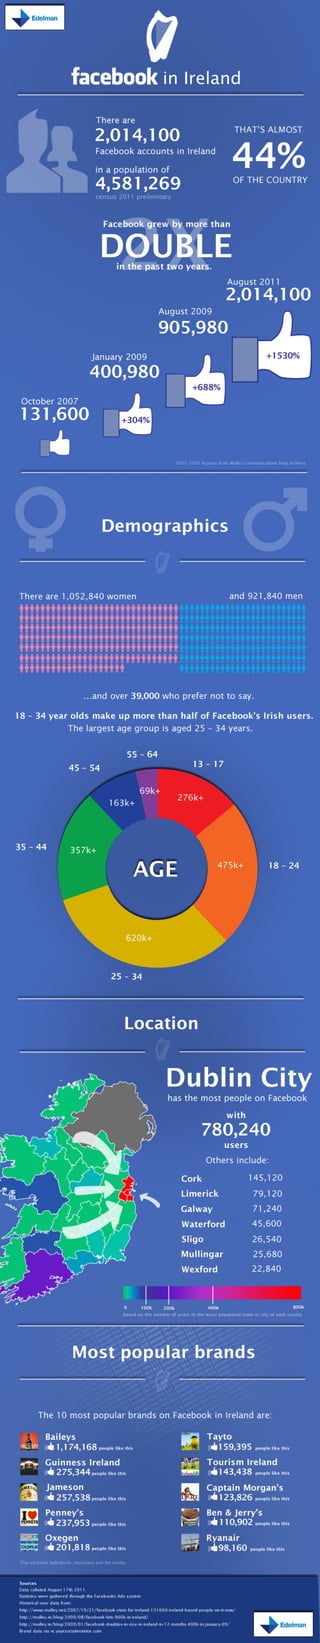 Edelman Irish Facebook Infographic 2011